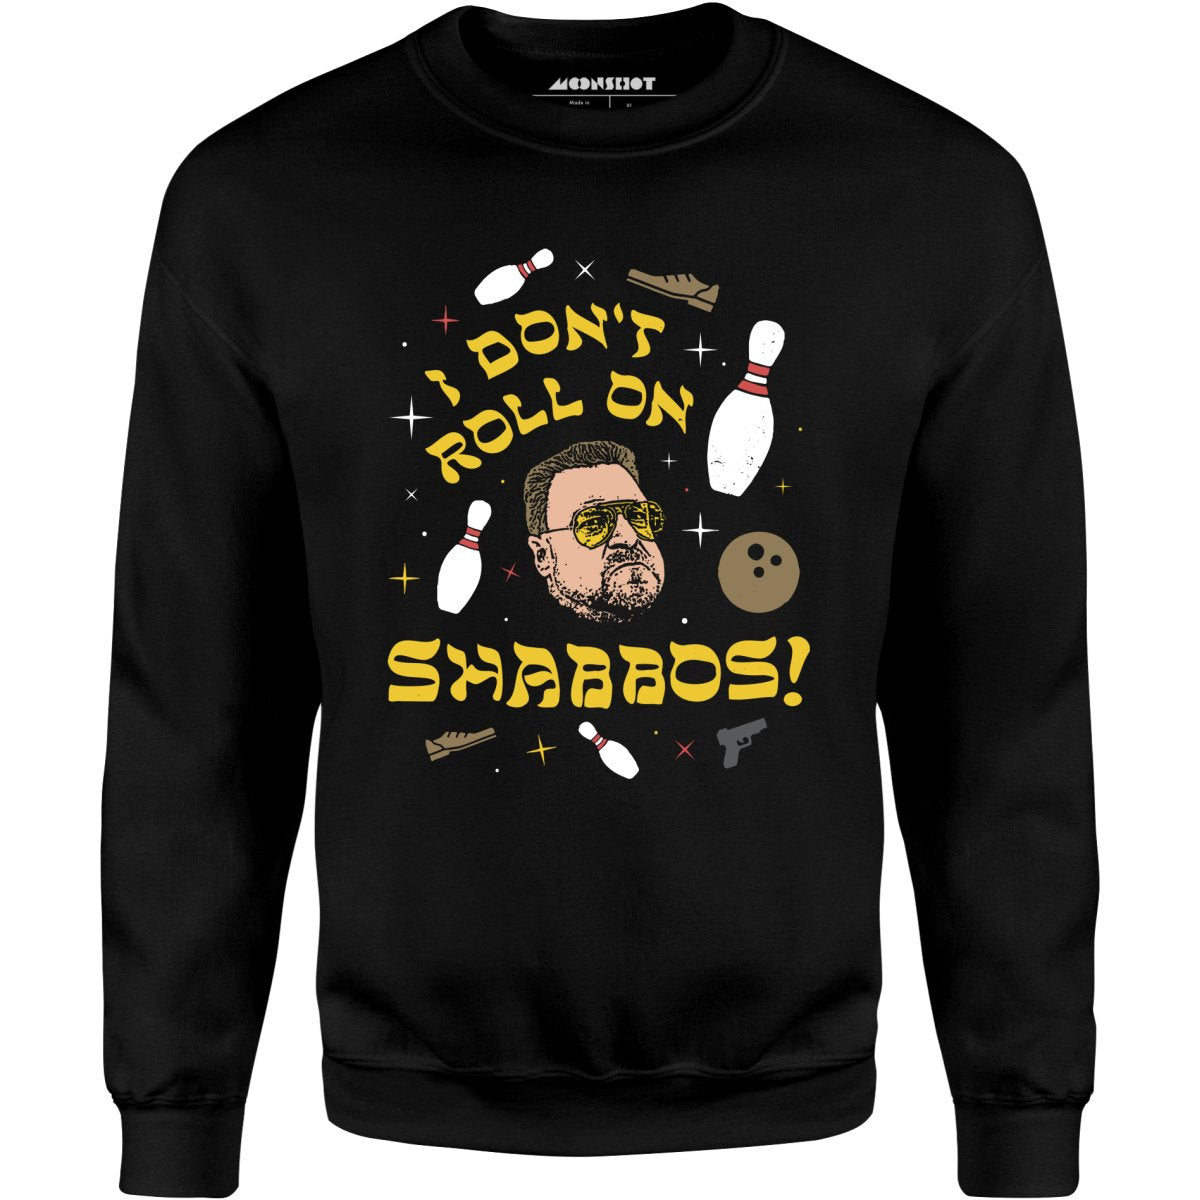 I Don't Roll on Shabbos - Unisex Sweatshirt